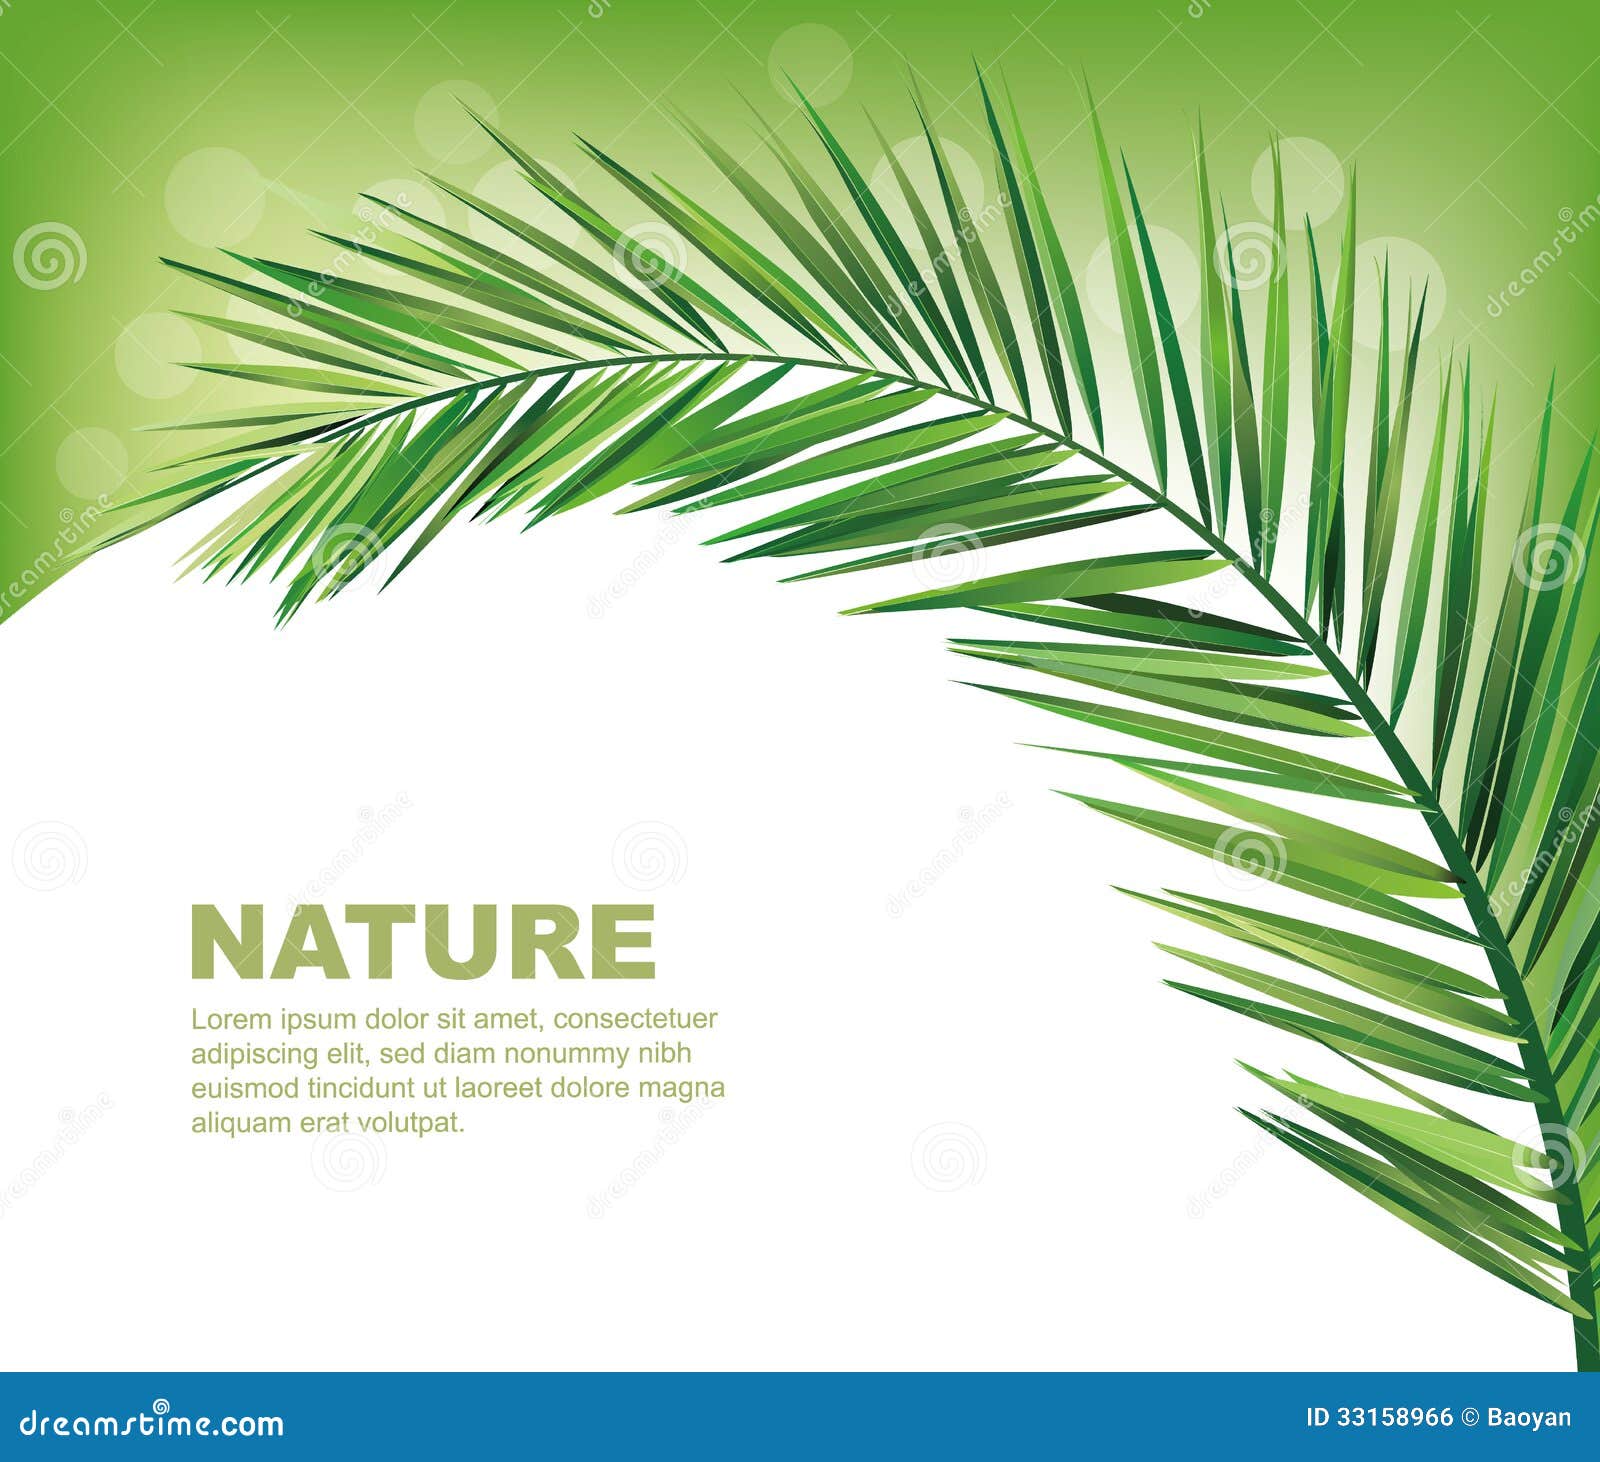 Coconut leaves stock vector. Illustration of leaf, tree - 33158966